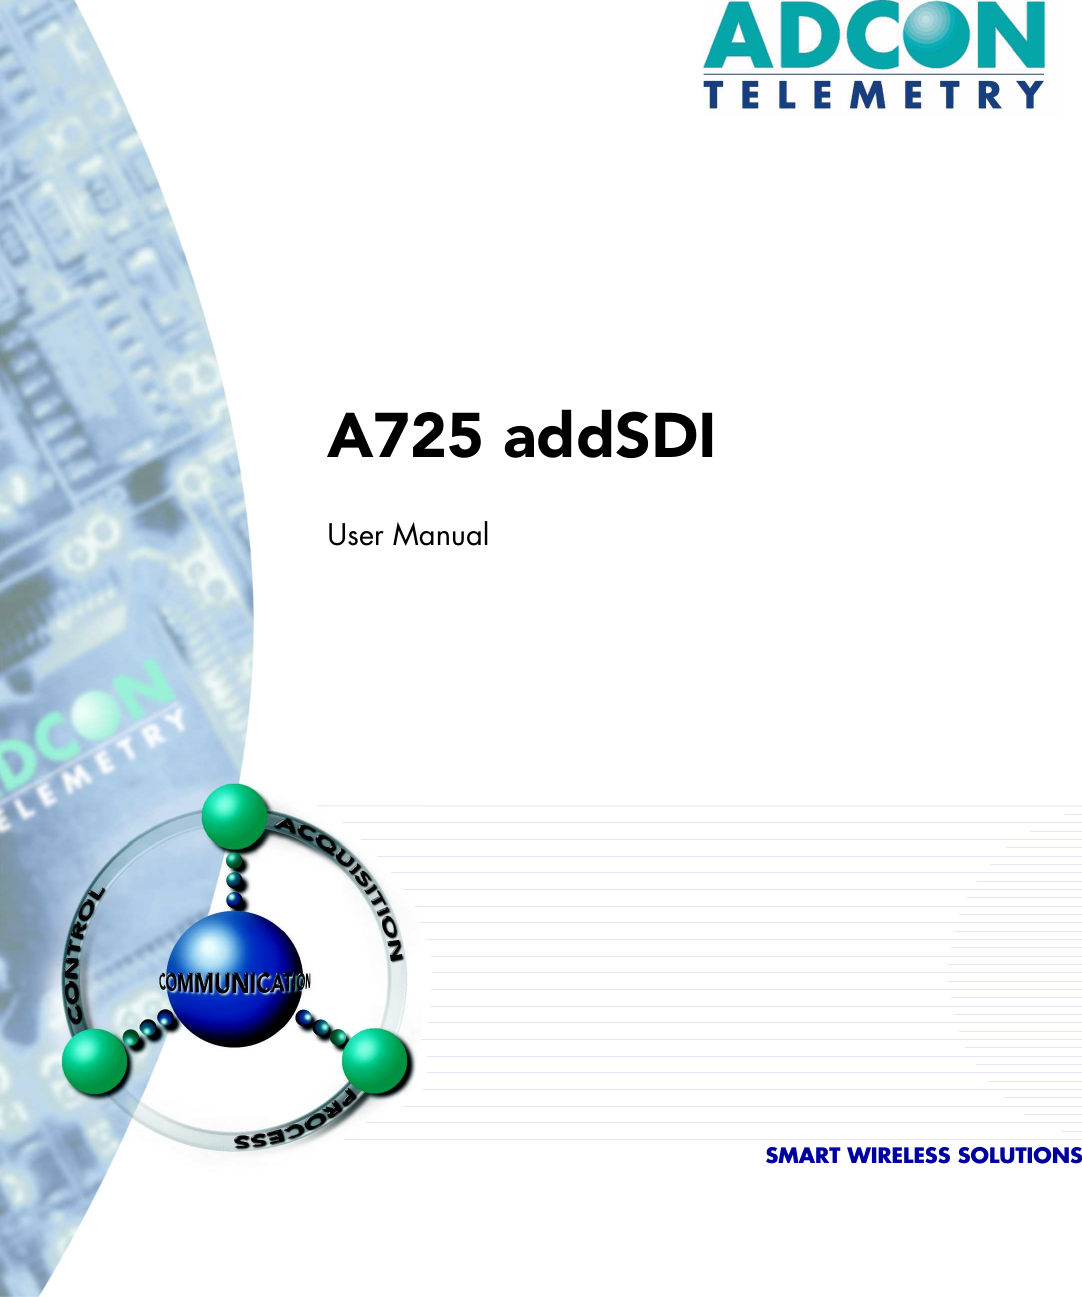 A725 addSDIUser ManualSMART WIRELESS SOLUTIONS